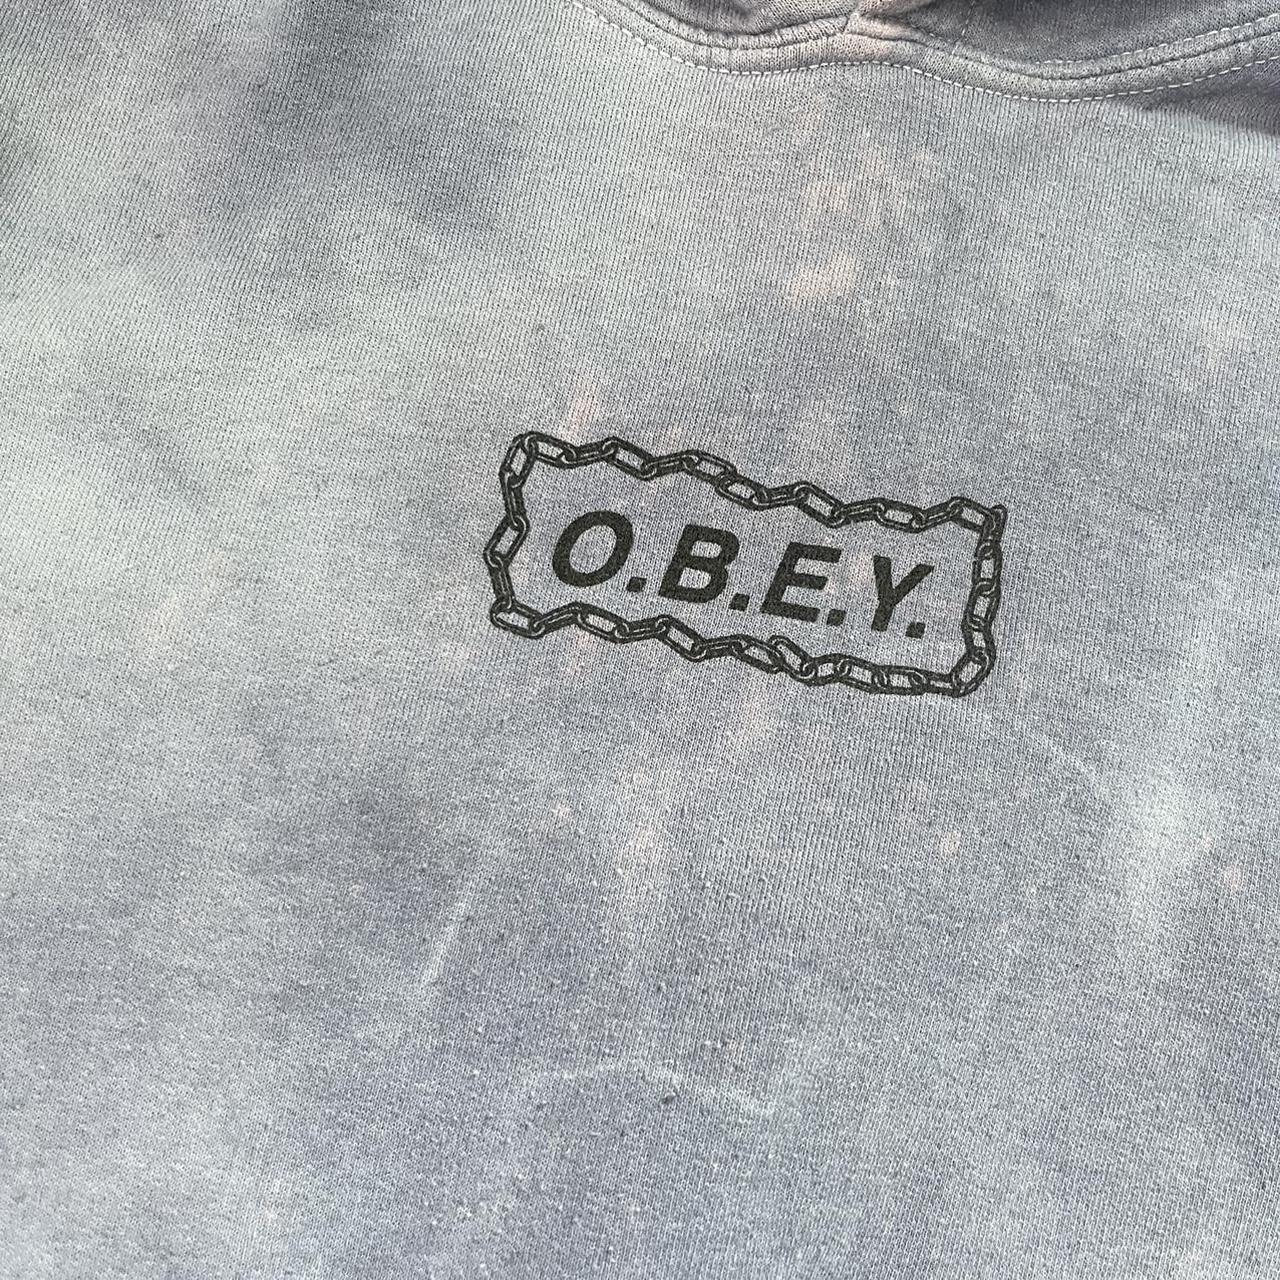 Product Image 4 - Obey Hoodie

•Unisex OBEY Blue Tie-Dye